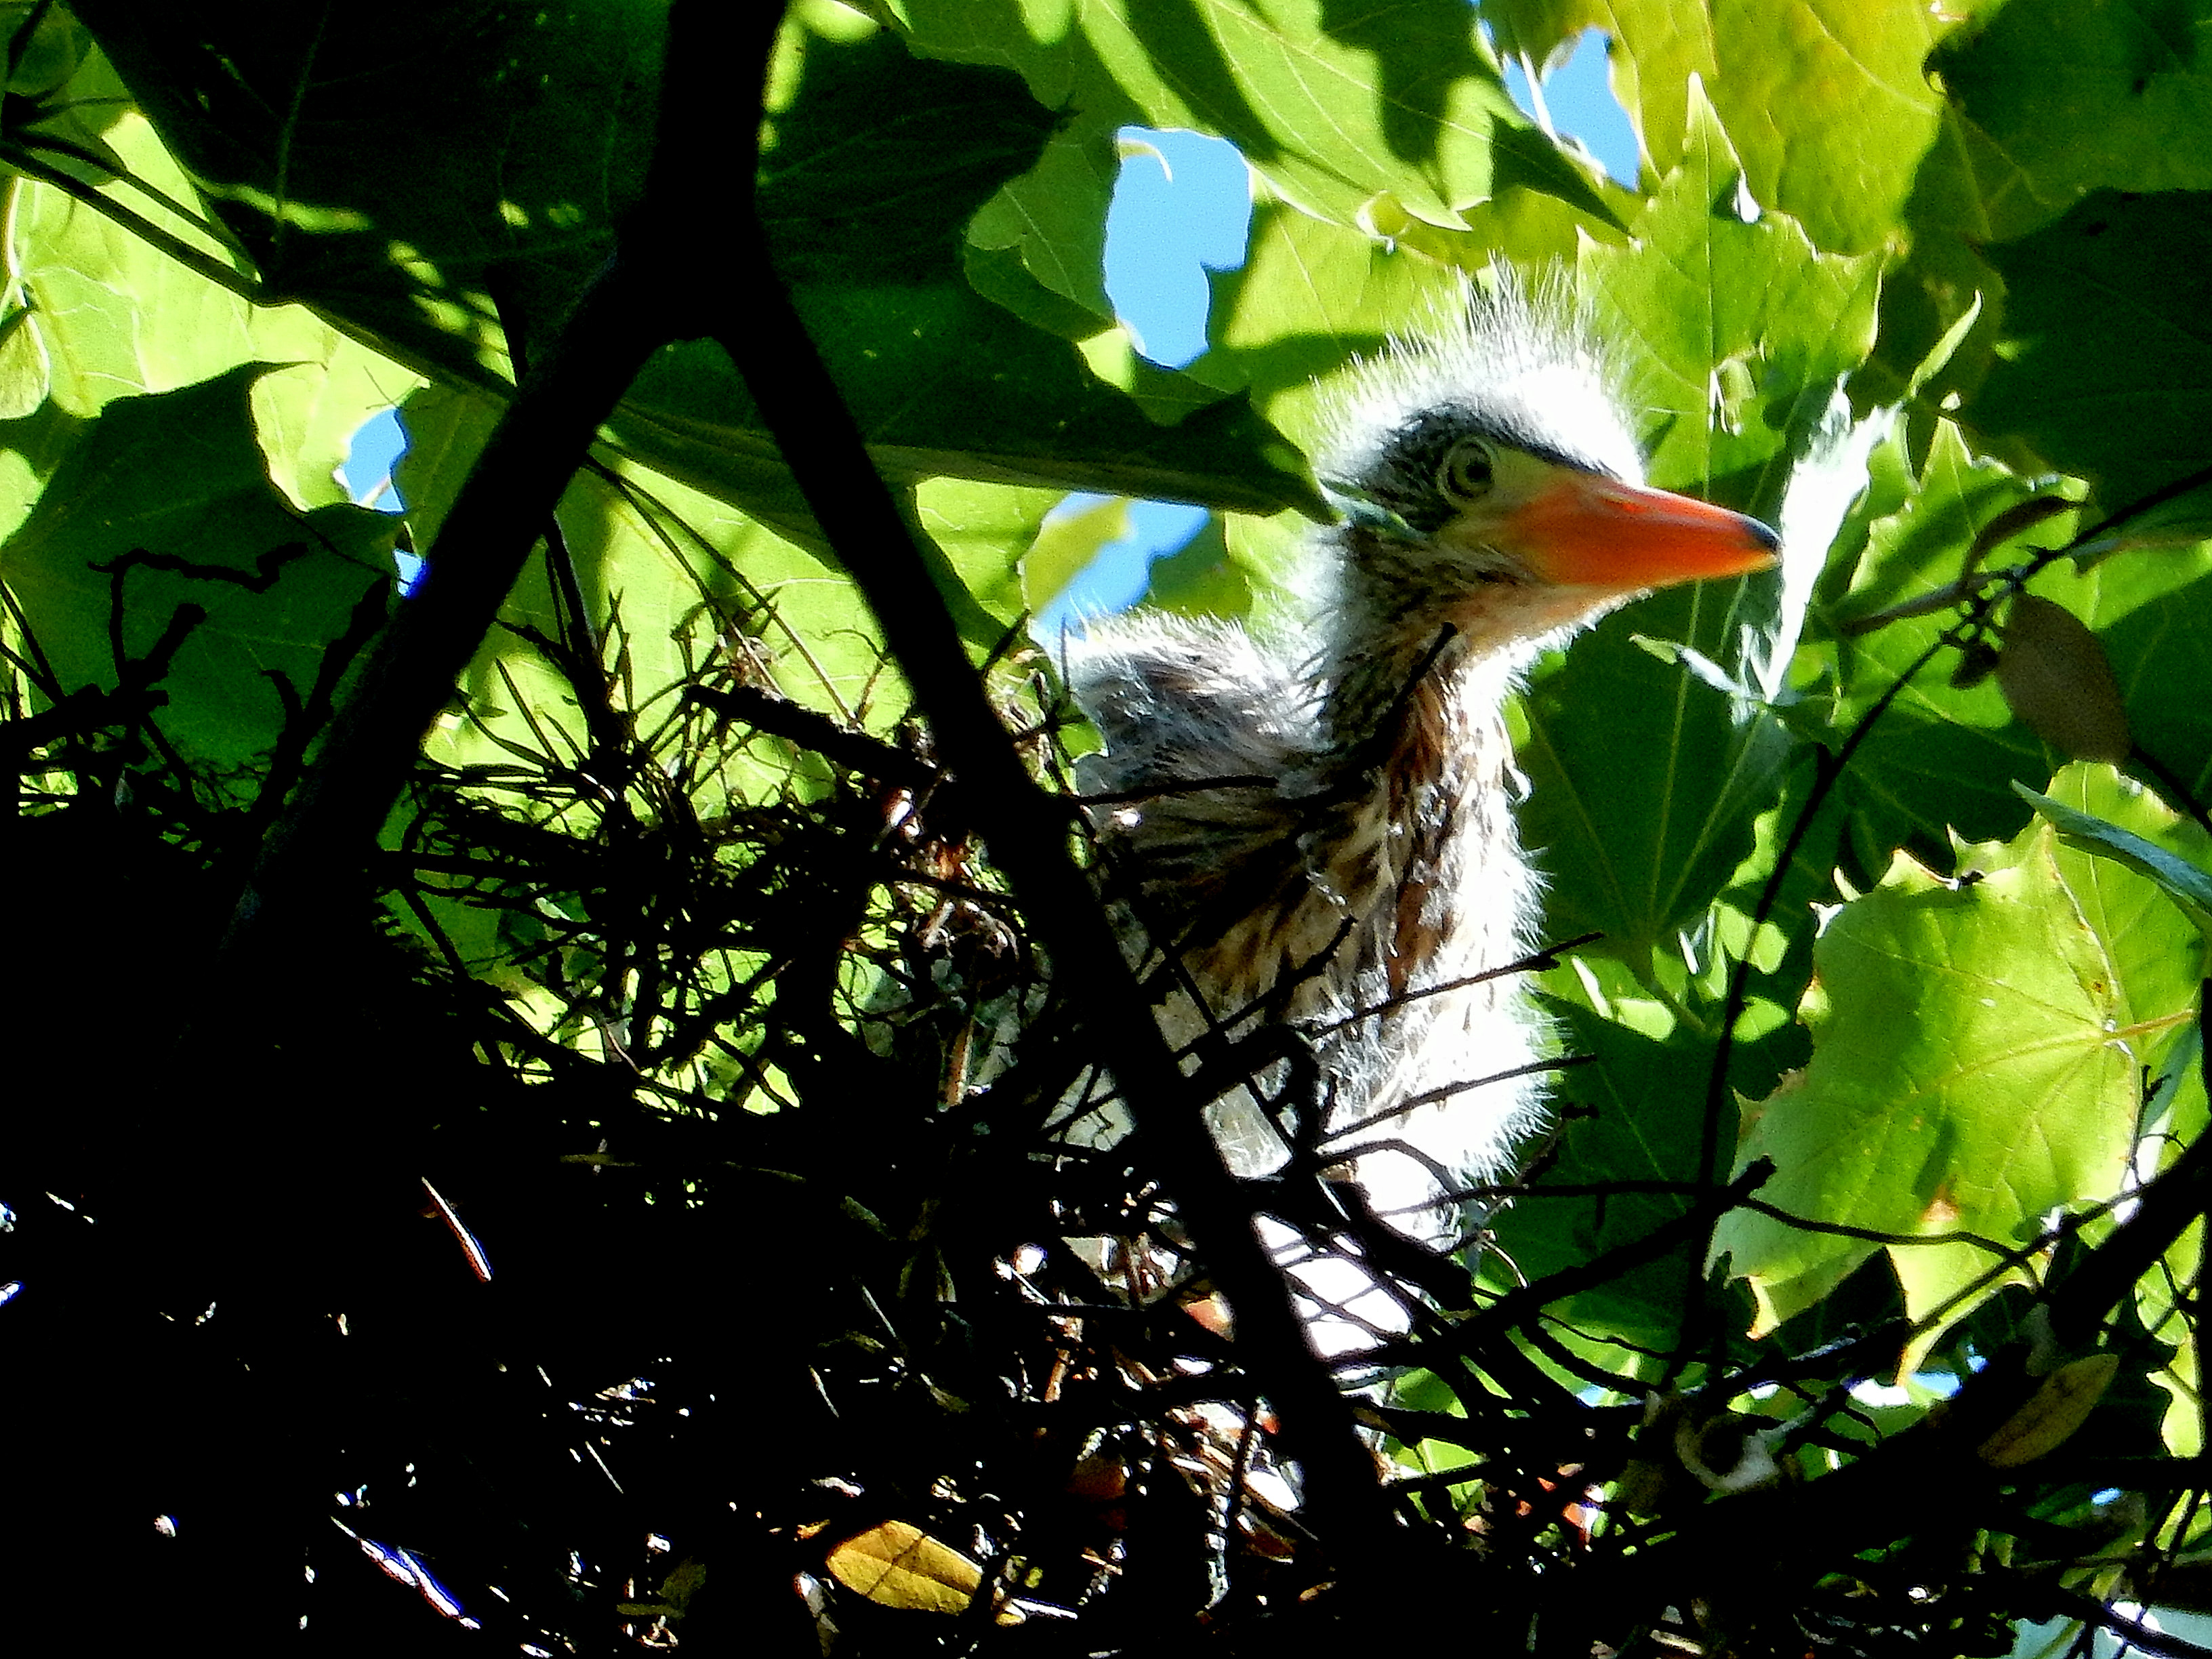 Green heron chick in the nest. photo: Joe Meche